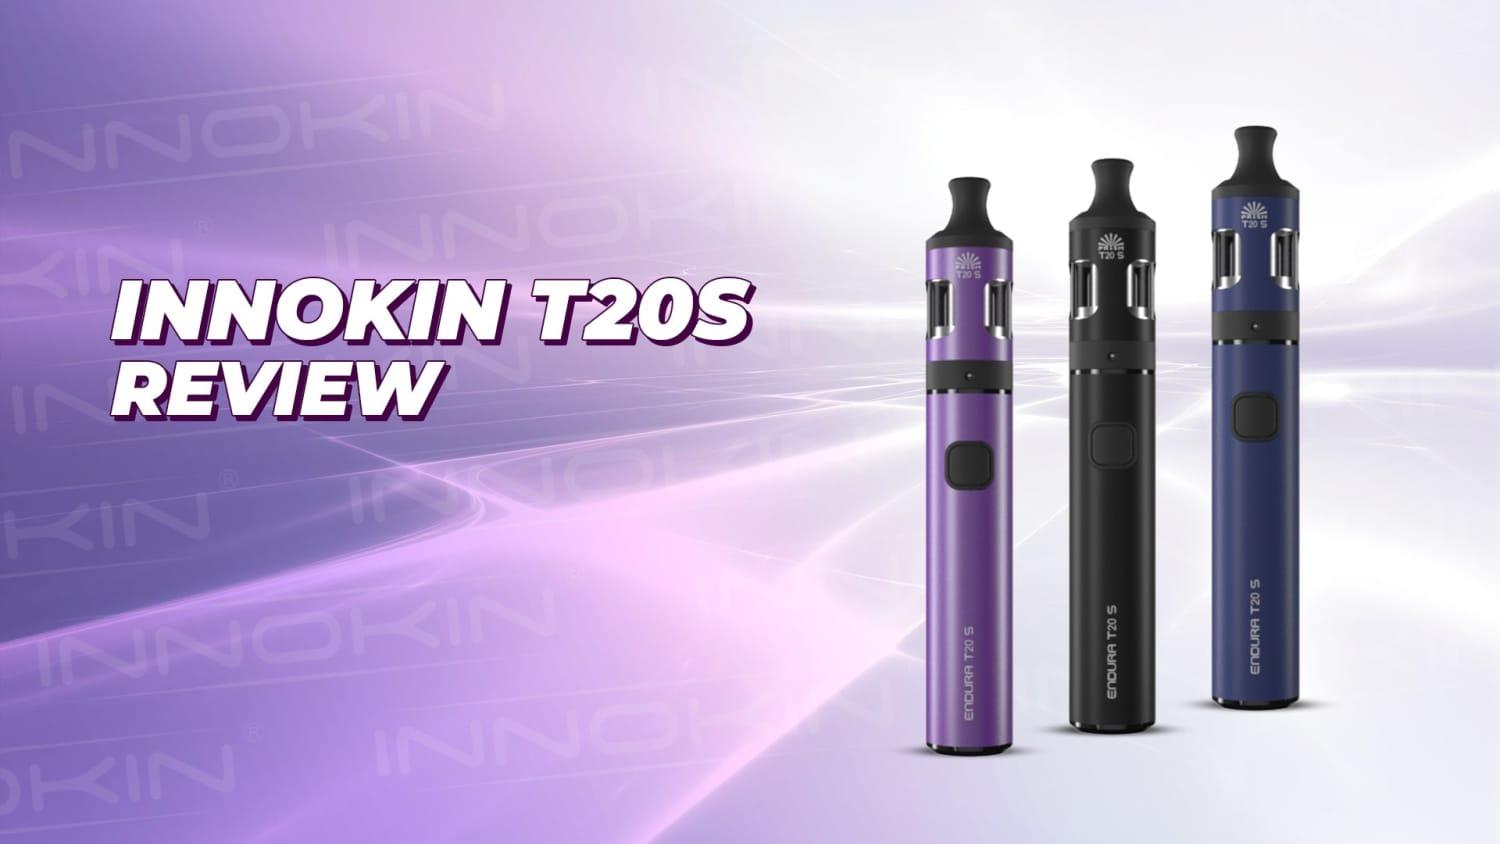 Innokin Endura T20-S Review - Brand:Innokin, Category:Vape Kits, Sub Category:Quit Smoking, Sub Category:Starter Kits